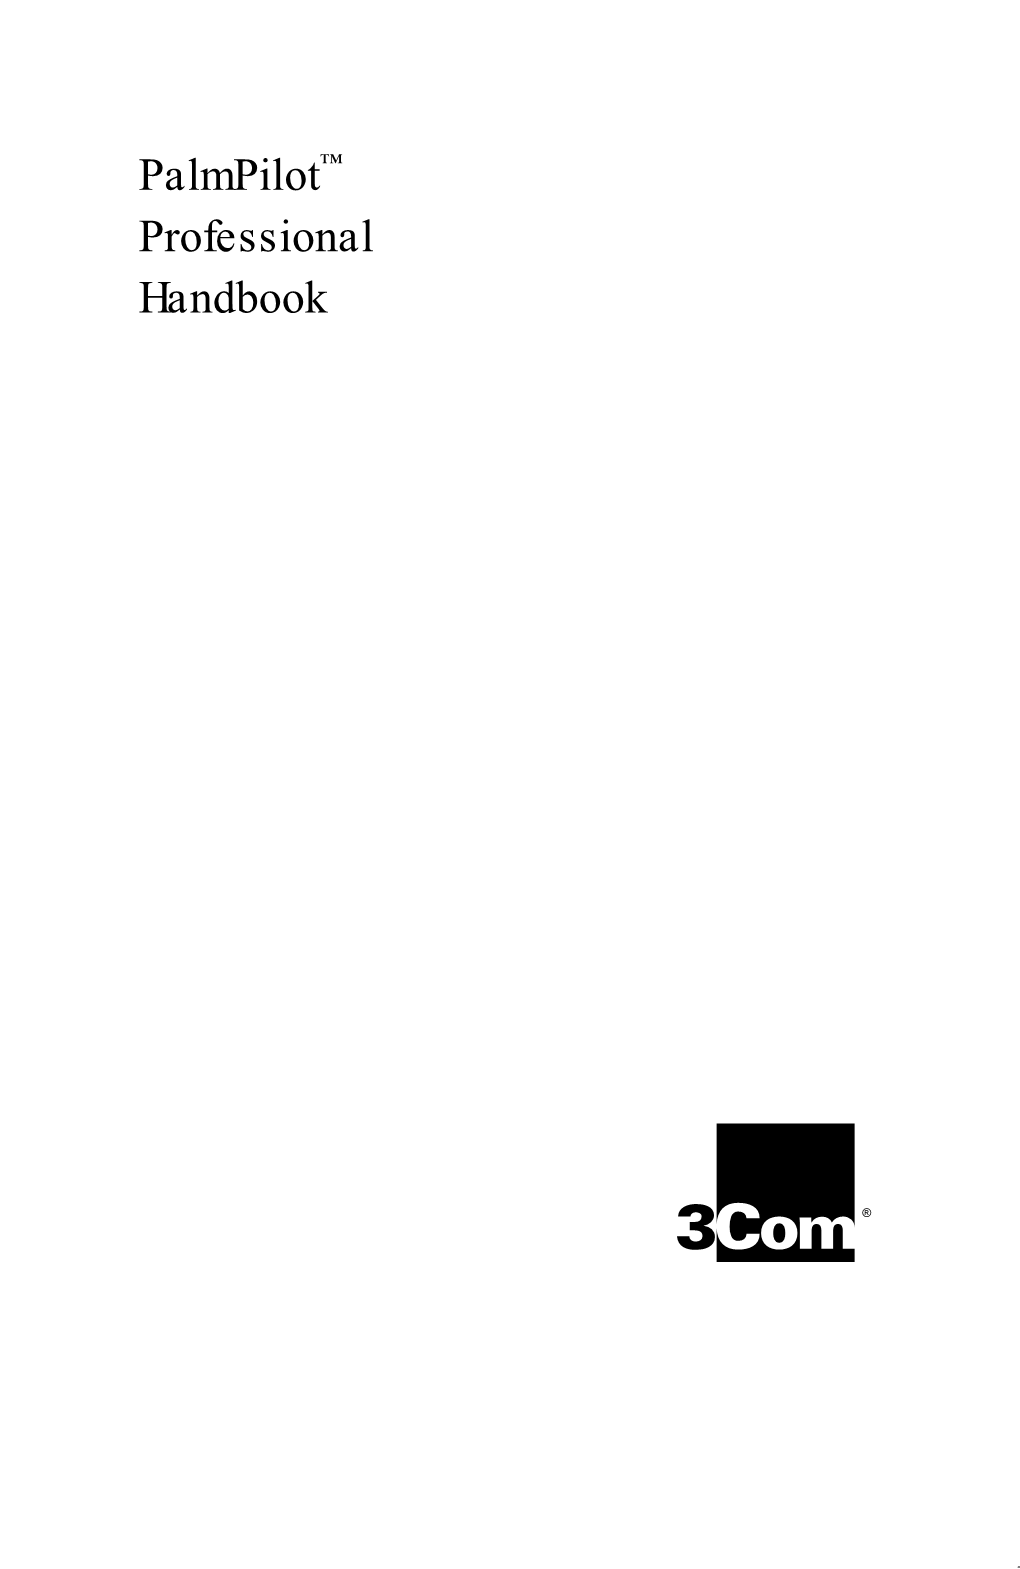 Palmpilot Professional Handbook Contents